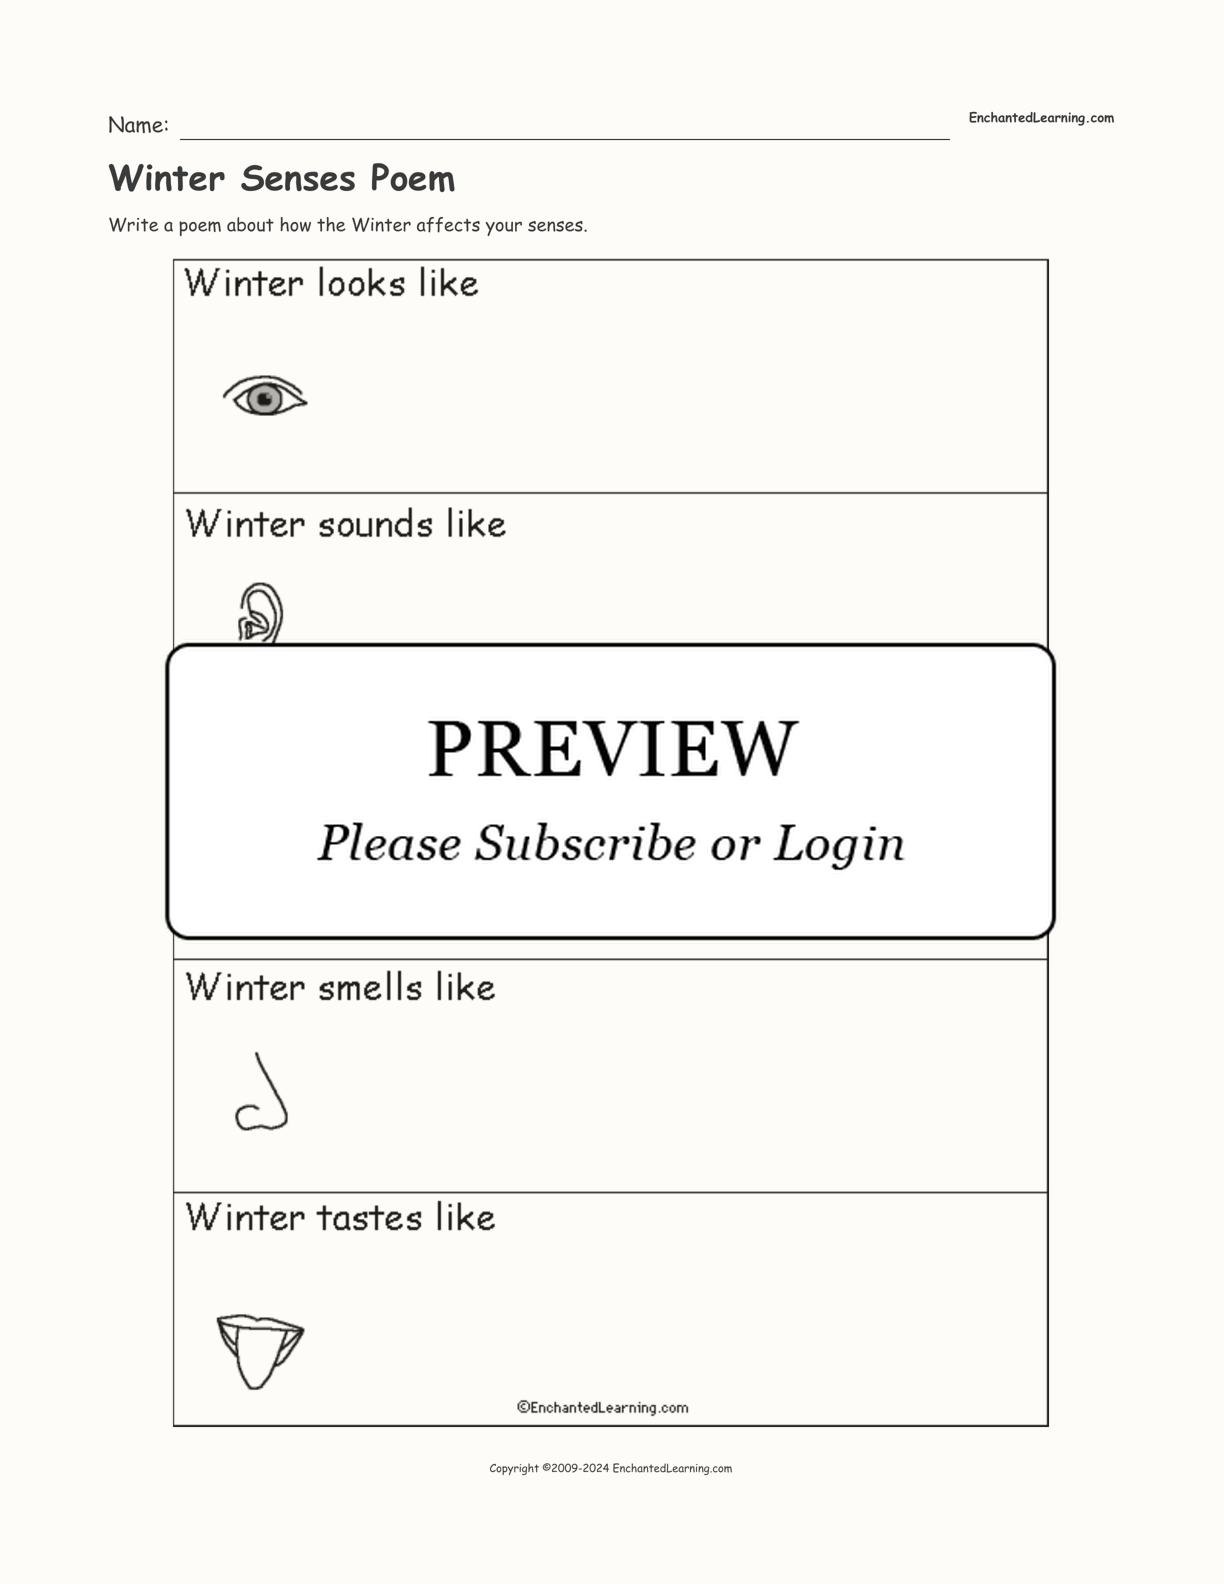 Winter Senses Poem interactive worksheet page 1